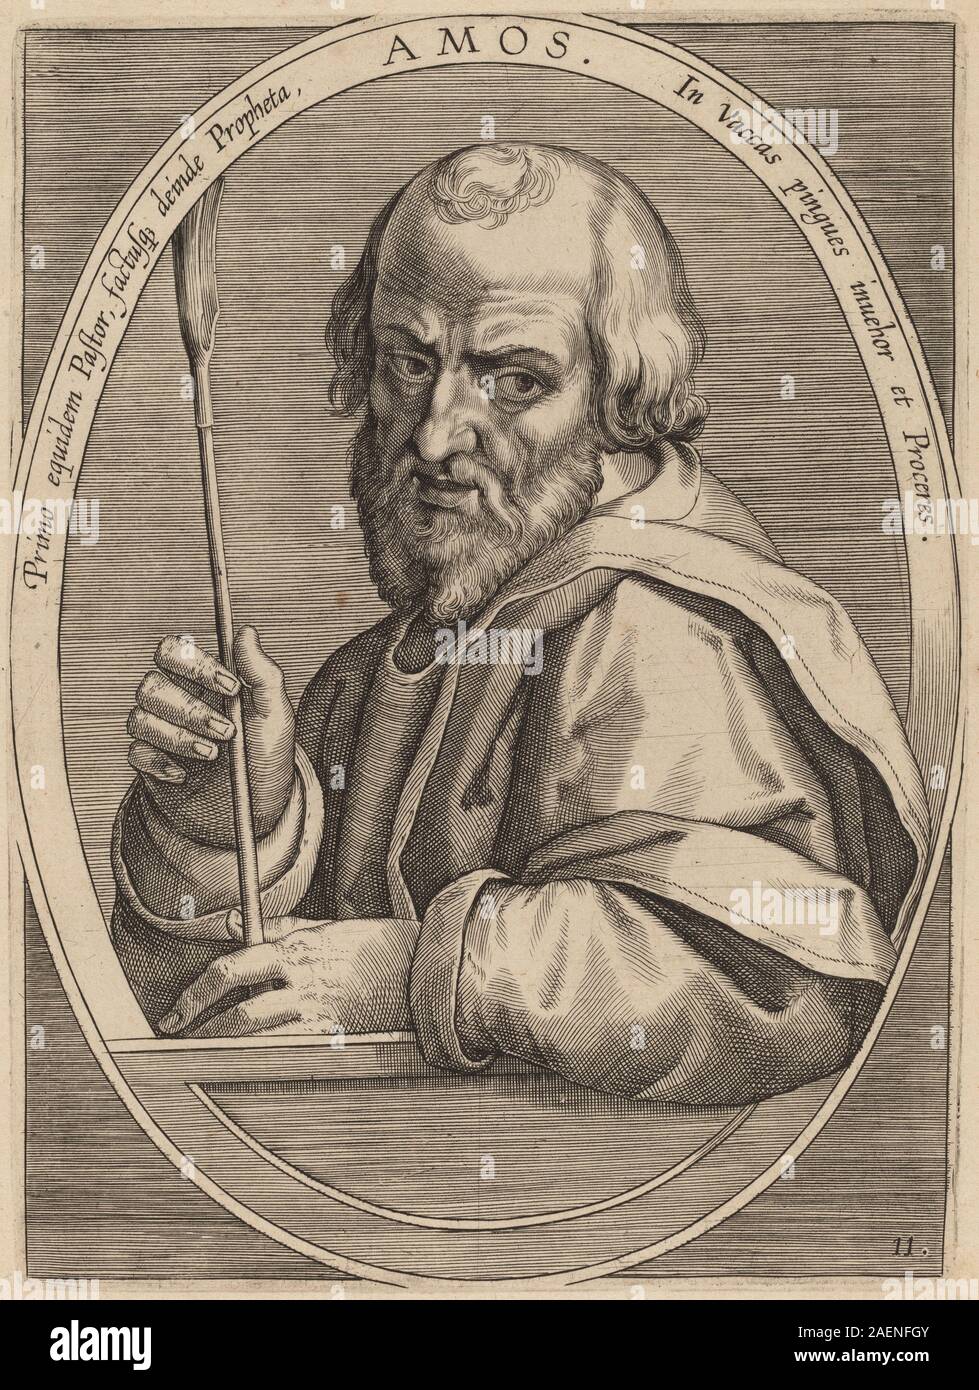 Theodor Galle after Jan van der Straet, Amos, published 1613, Amos; published 1613 Stock Photo